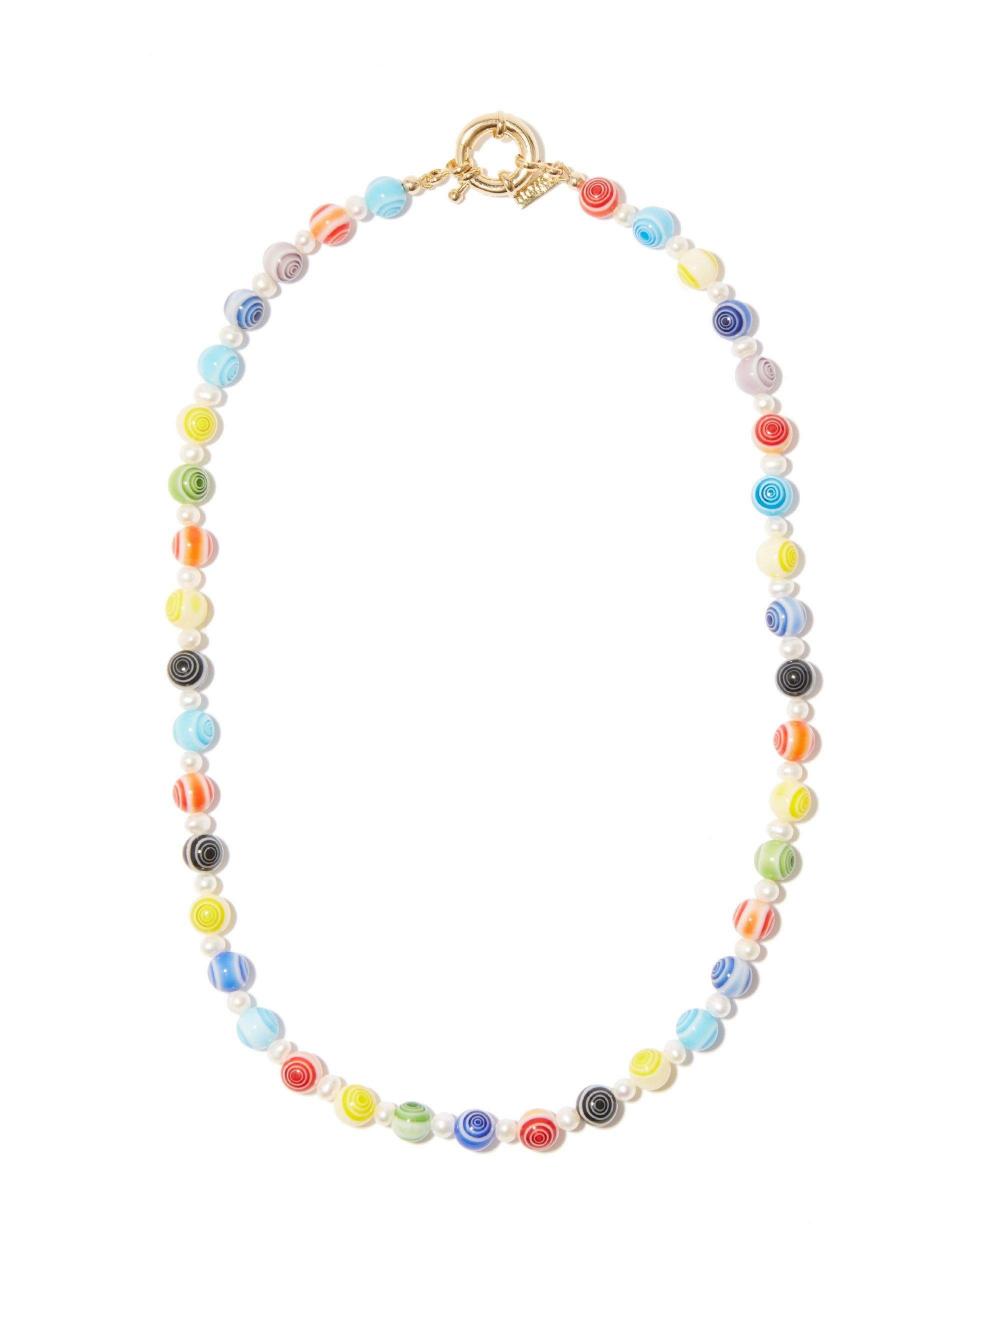 eliou circus beaded necklace - 2021年Q3最抢手的10件时尚单品，彩色玻璃珠项链竟榜上有名！